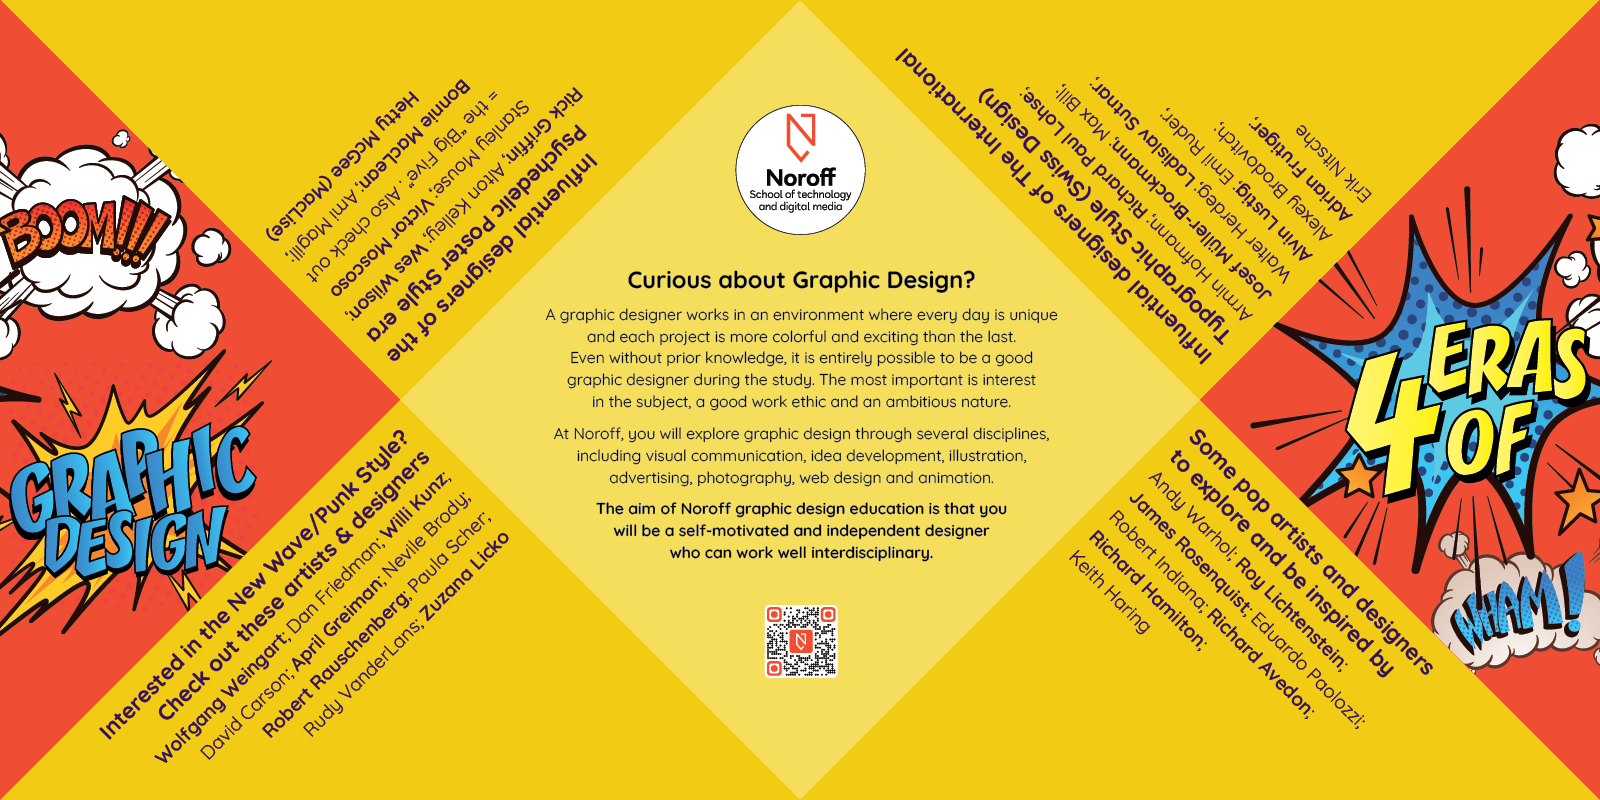 Graphic design history leaflet